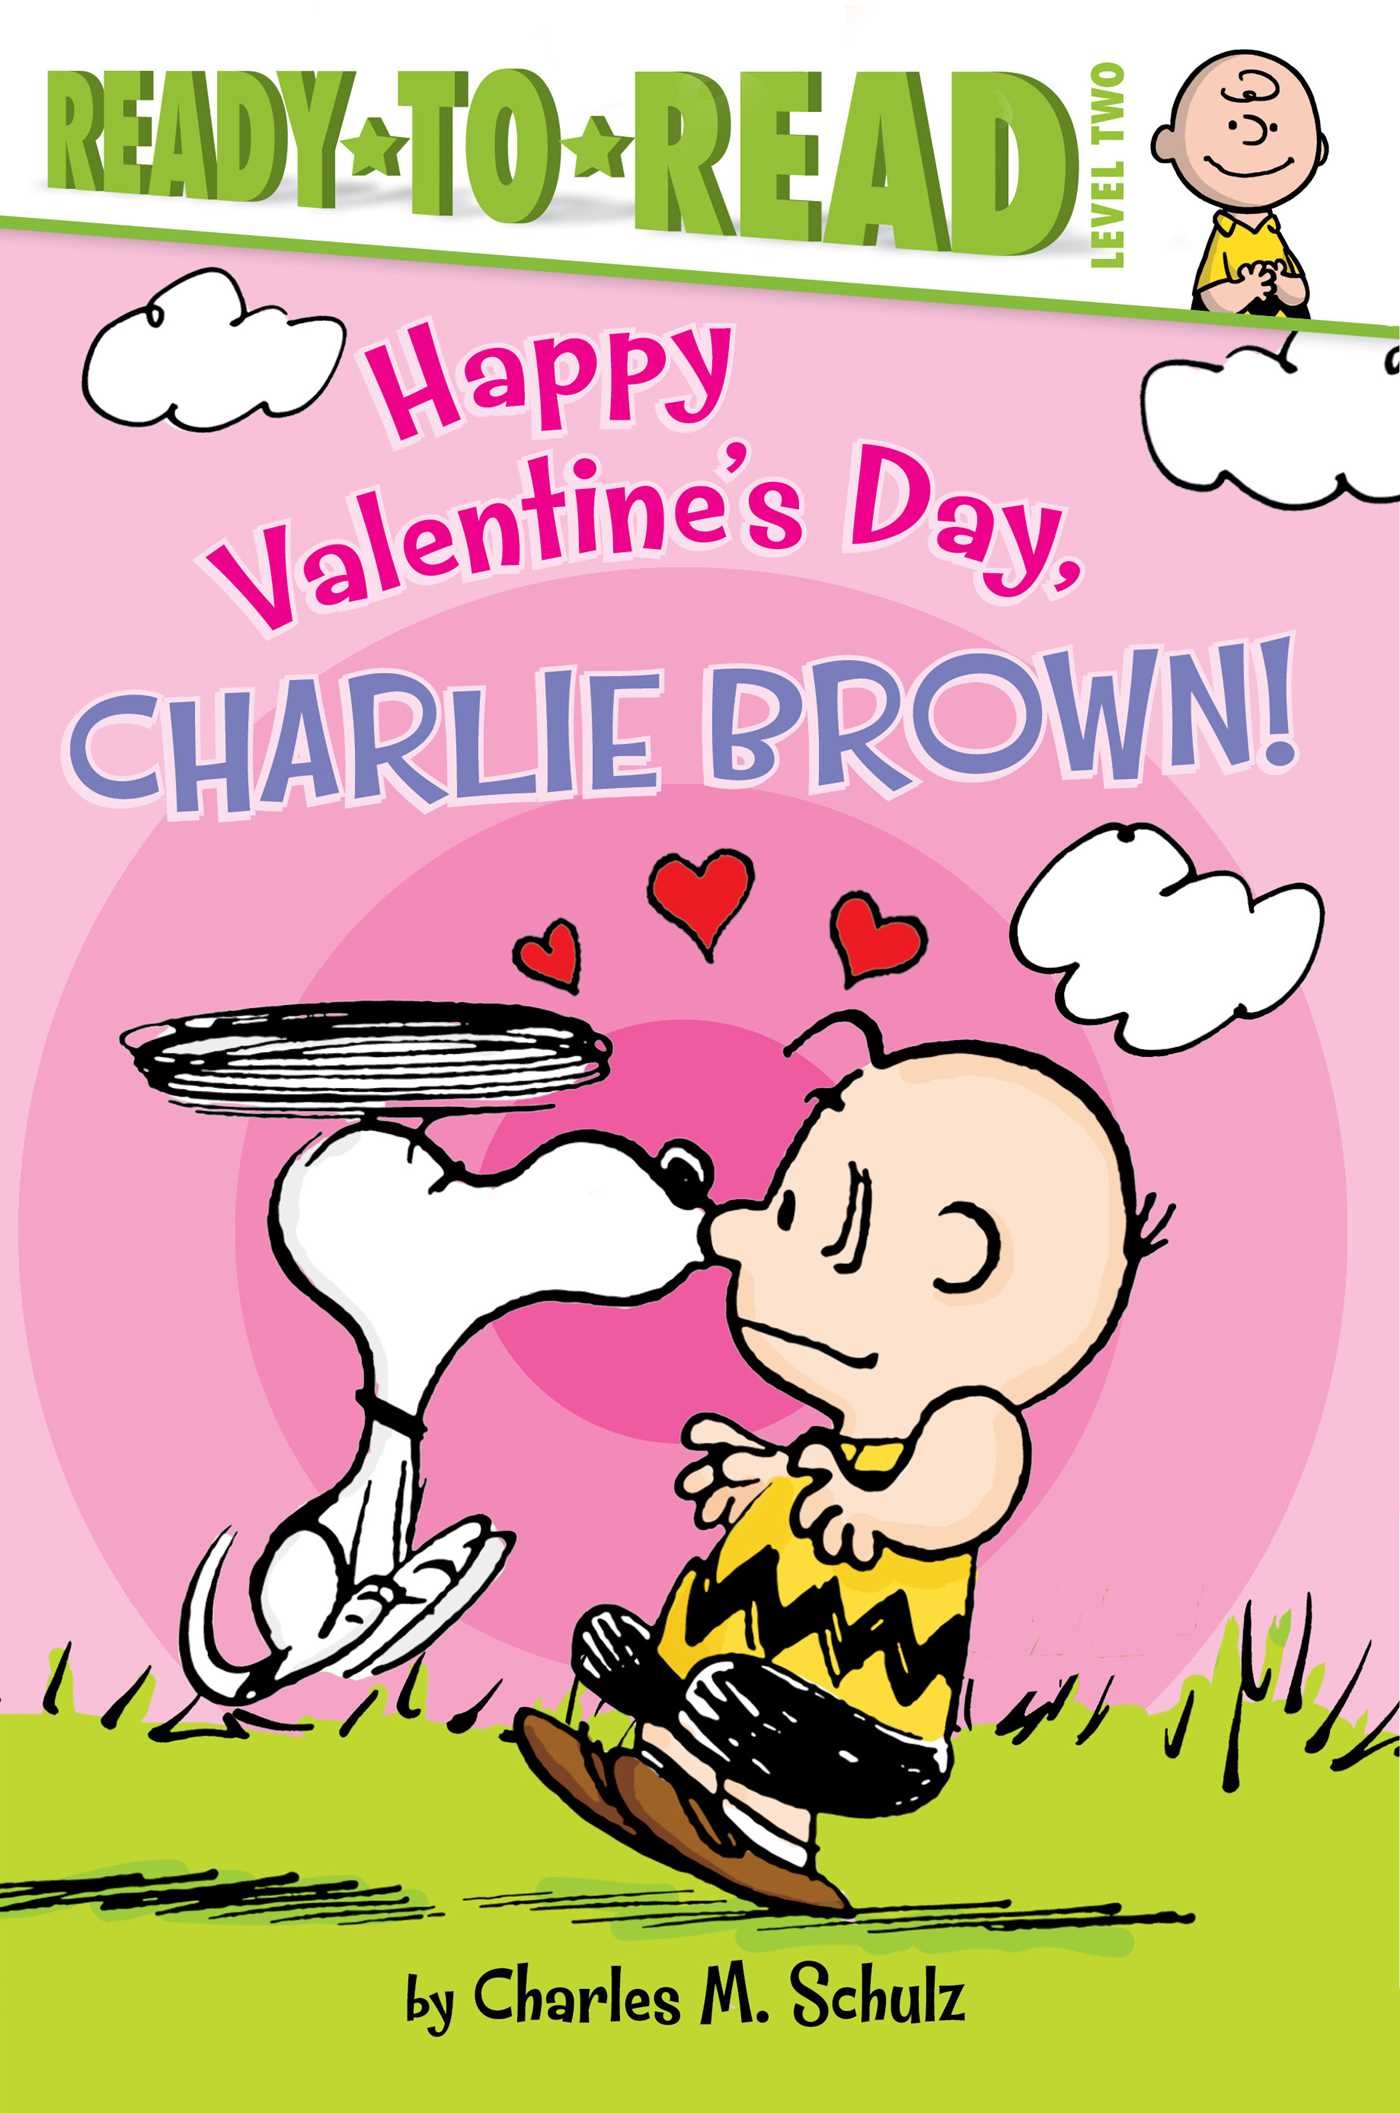 Happy valentines day charlie brown!